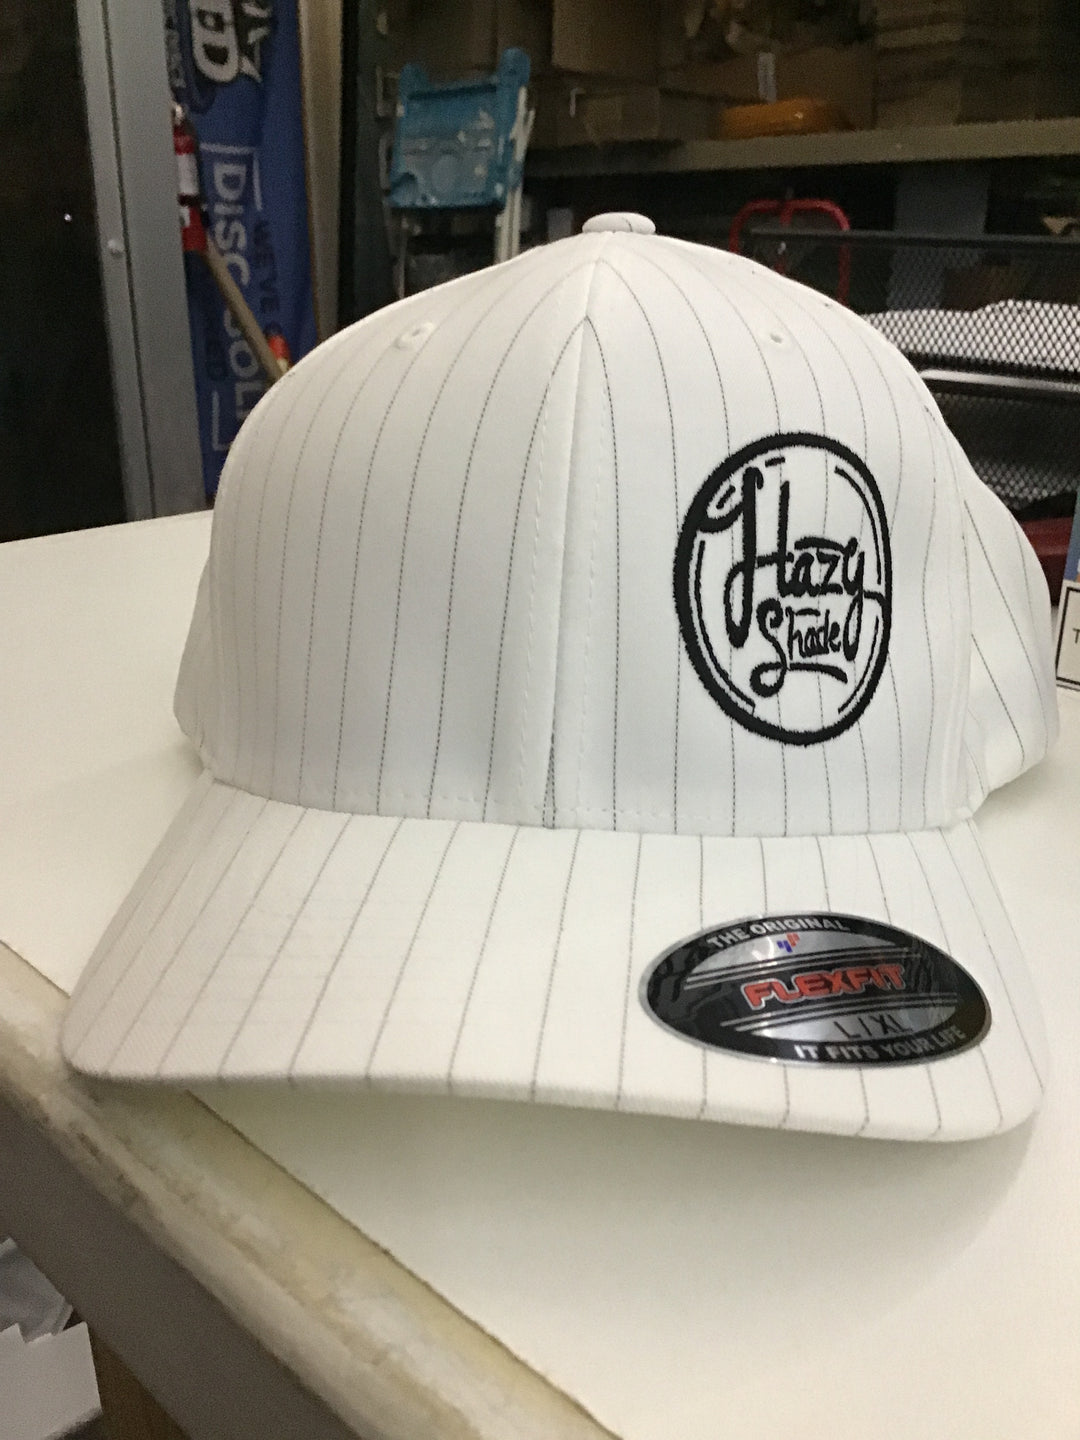 Hazy Shade Flexfit White Pinstrip Round Logo L/XL